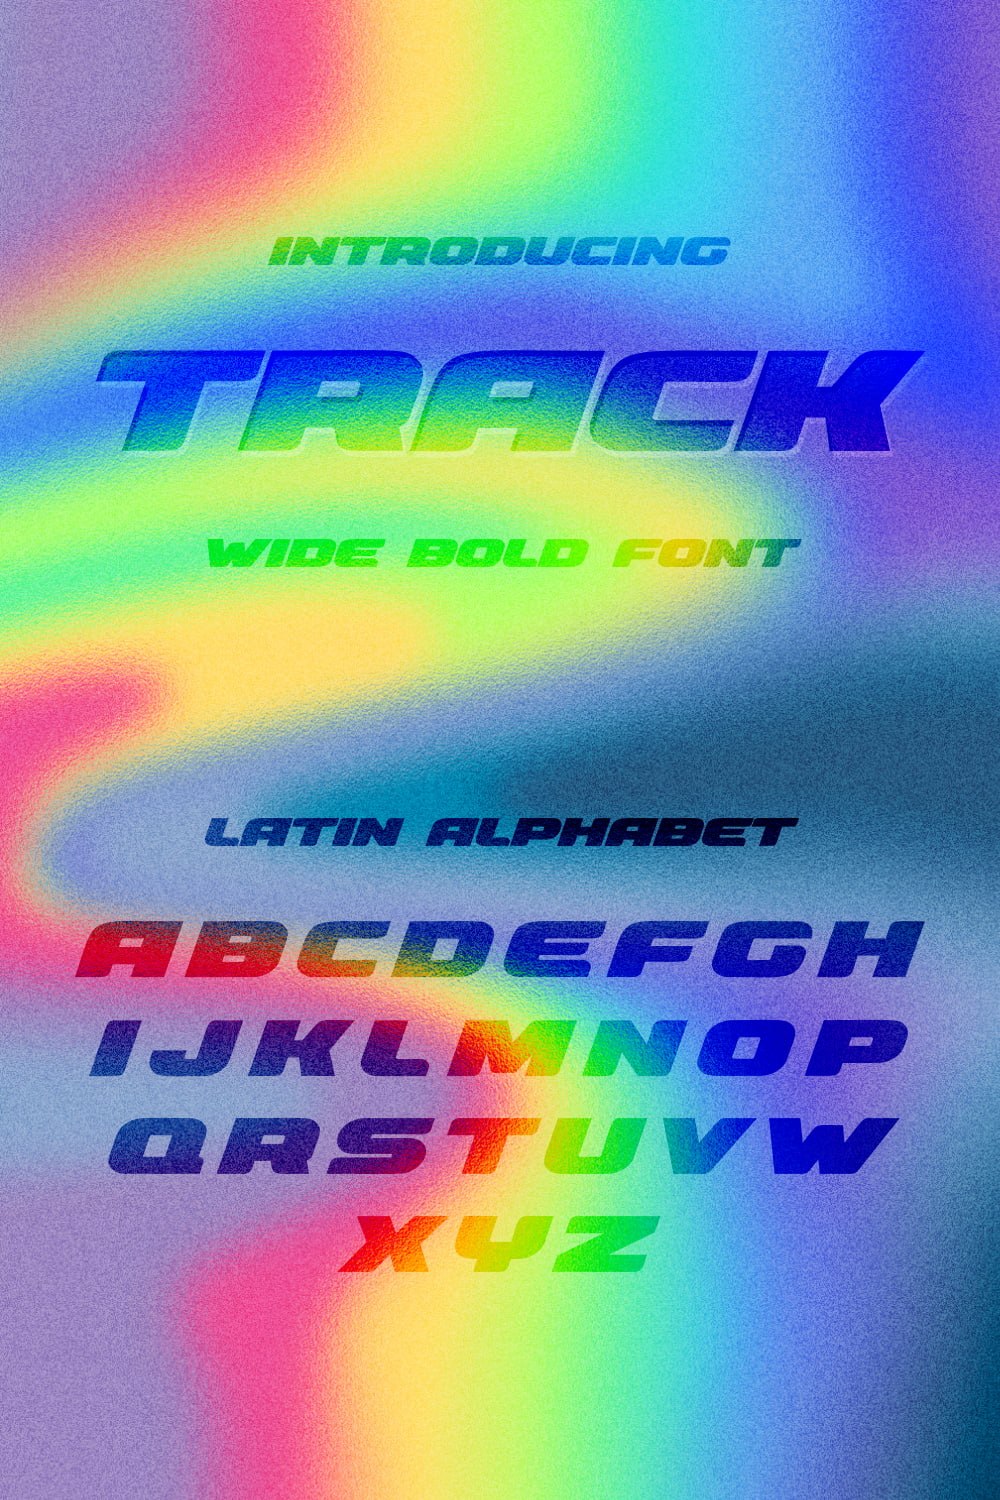 Track font of pinterest.